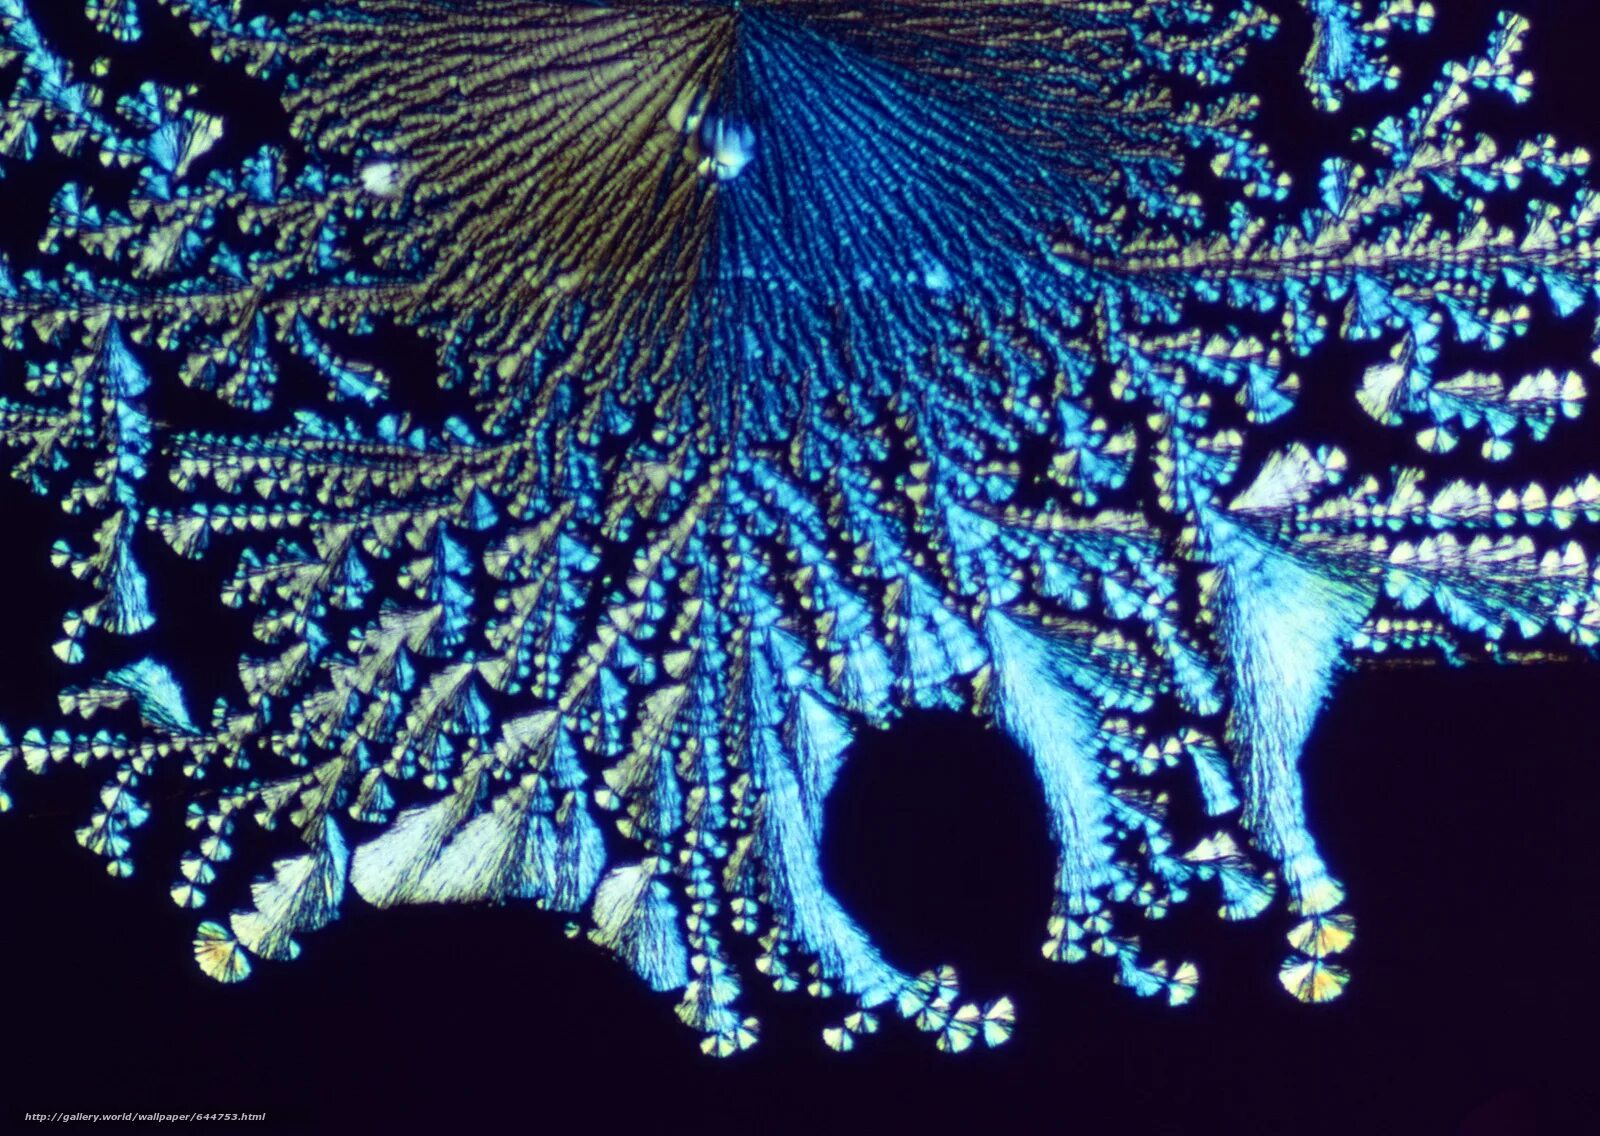 Кристалл меди под микроскопом. Кристаллы в микроскопе. Минералы под микроскопом. Медь под микроскопом.